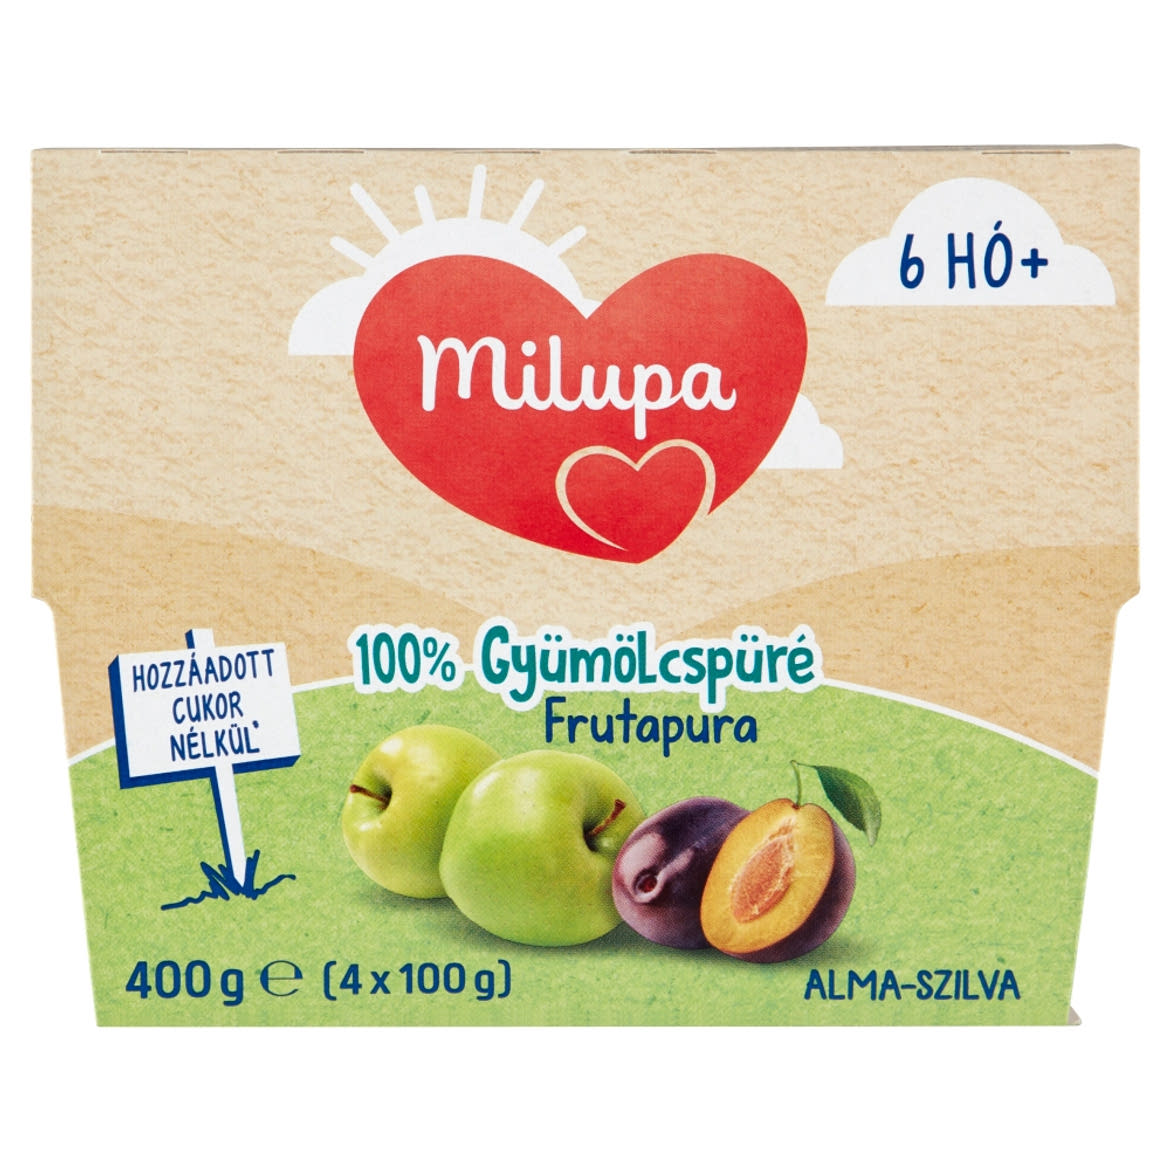 Milupa Frutapura alma-szilva 100% gyÃ¼mÃ¶lcspÃ¼rÃ© 6 hÃ³+ 4 x 100 g